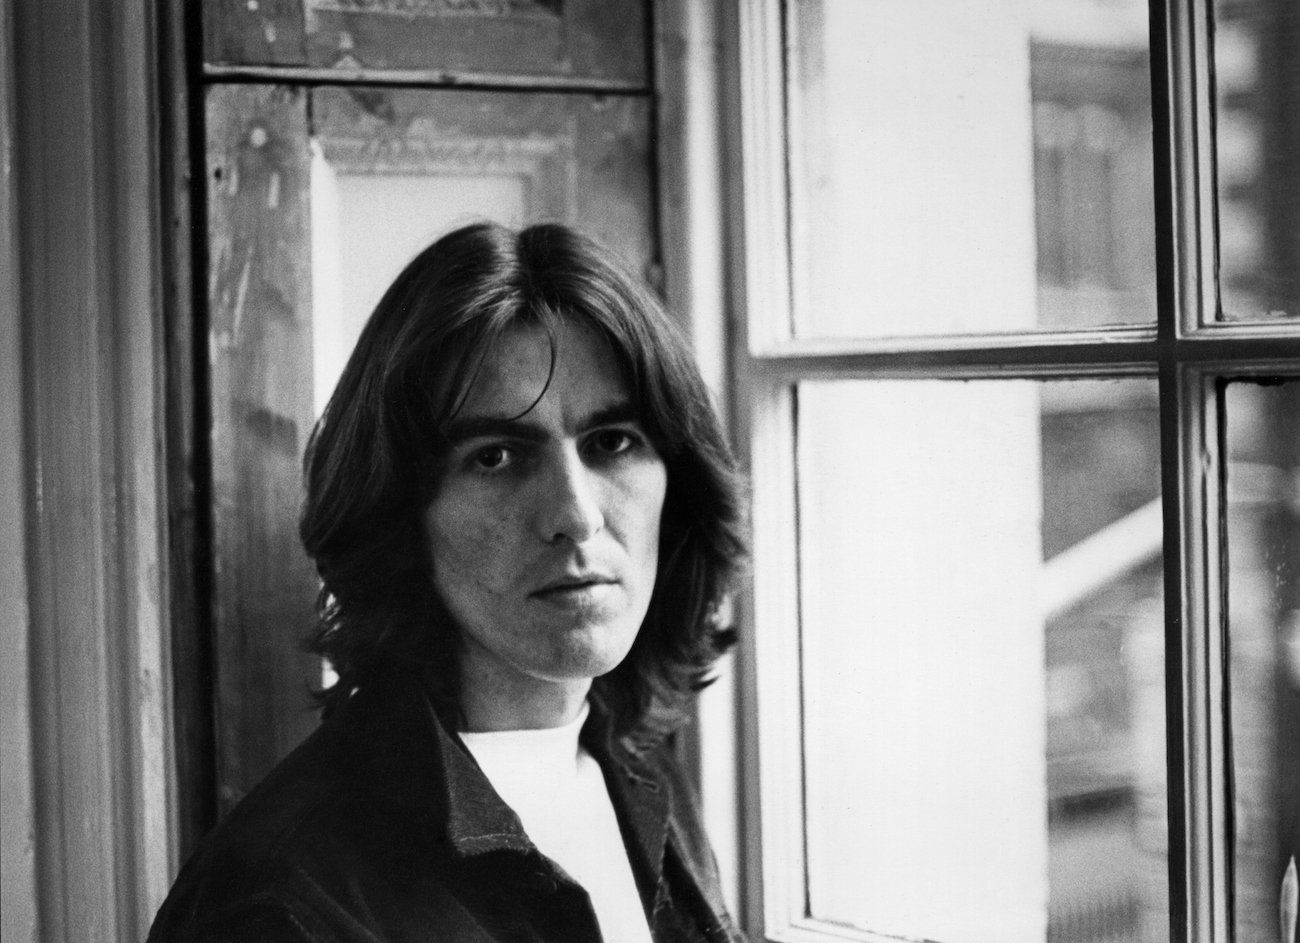 George Harrison posing at Apple Headquarters in London, 1969.